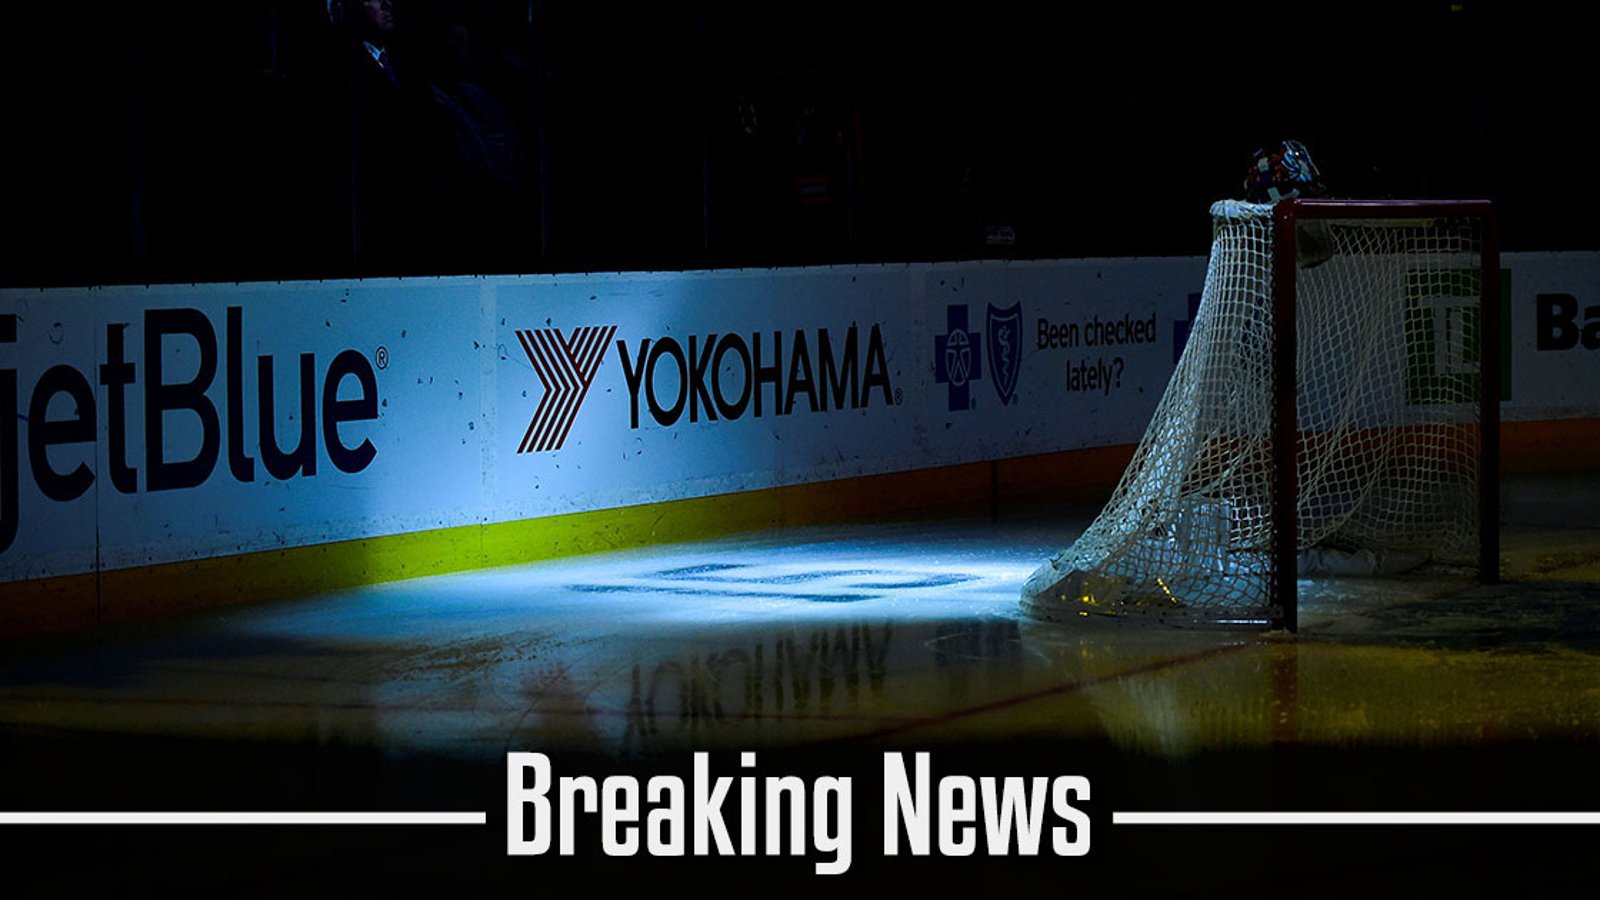 NHL coach destroys his own goalie: “Make a [expletive] save”